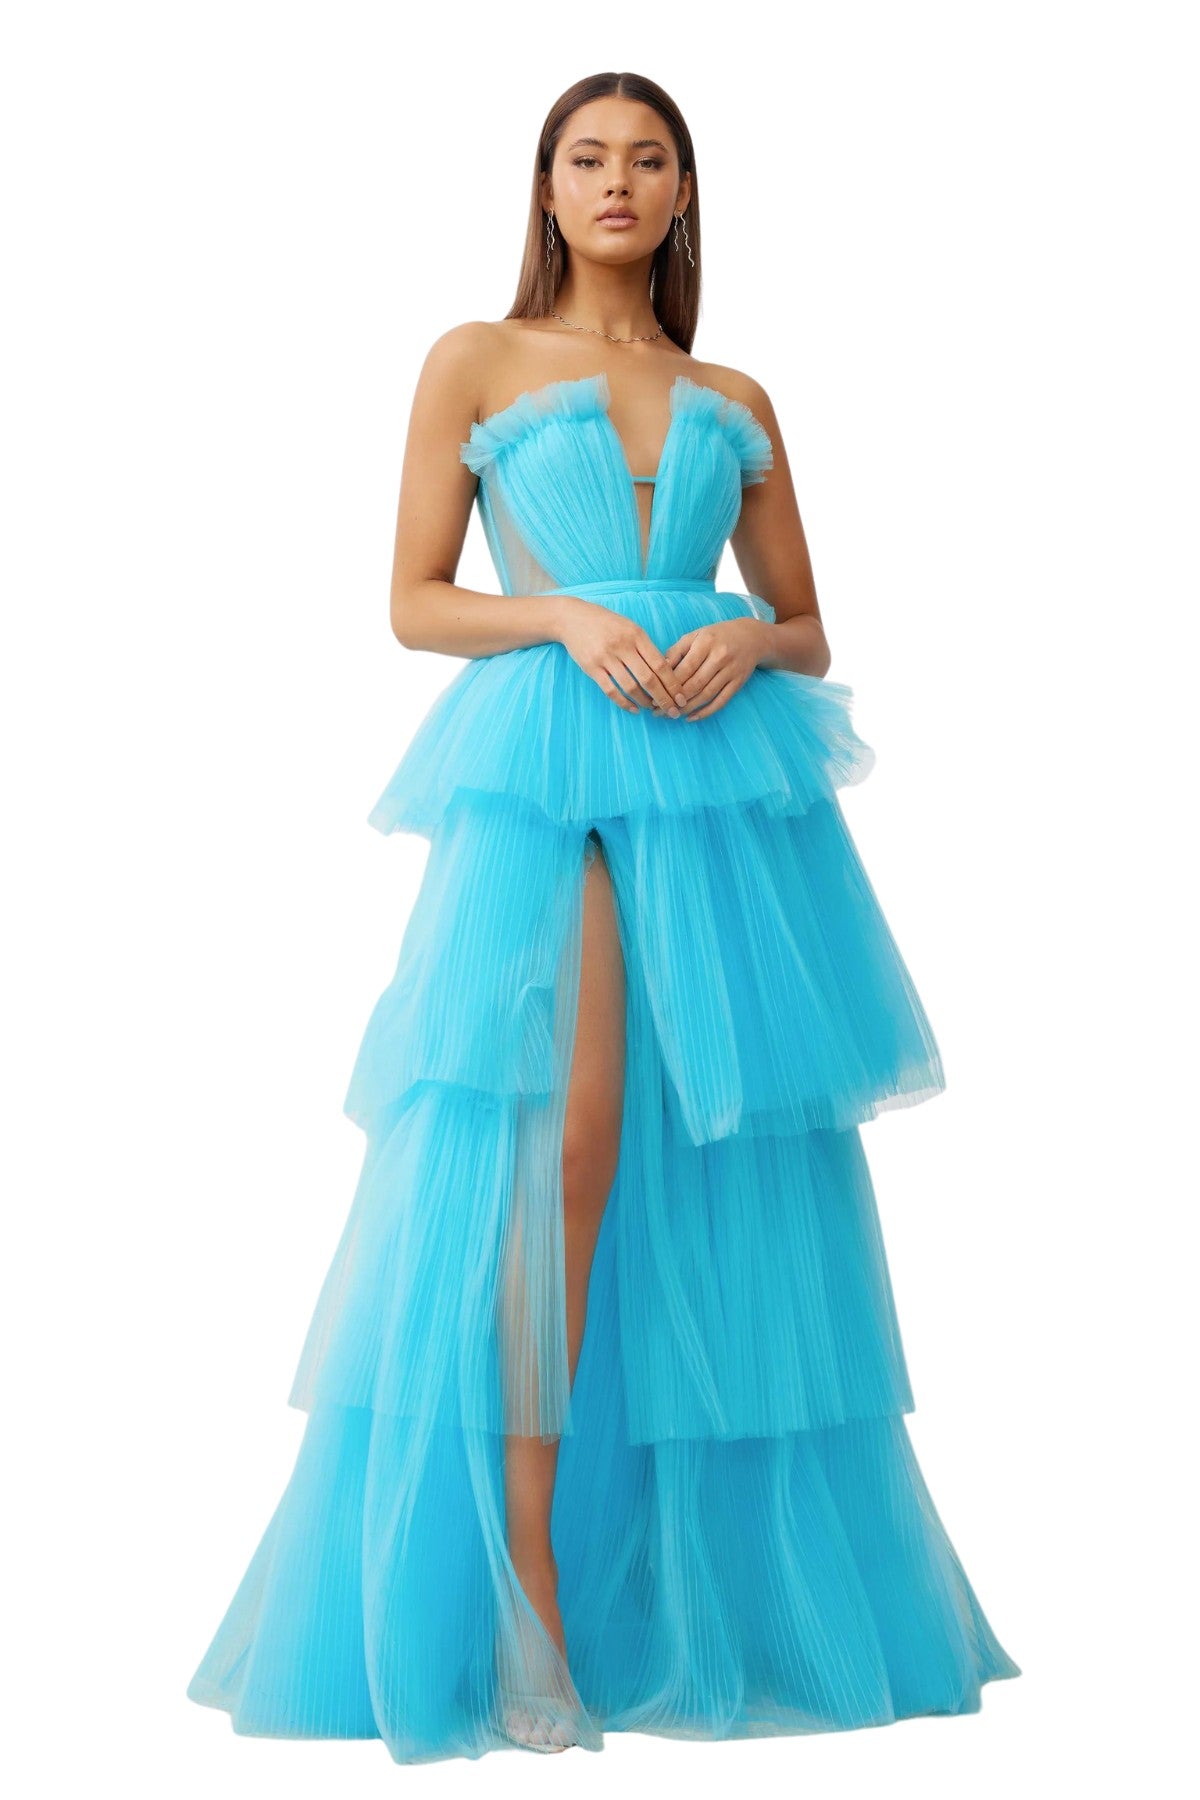 Tinaholy LEXI Cruz Dress (Turquoise Blue) - RRP $499 - 9_9274b061-f531-49f6-836b-dd0909319b68.jpg